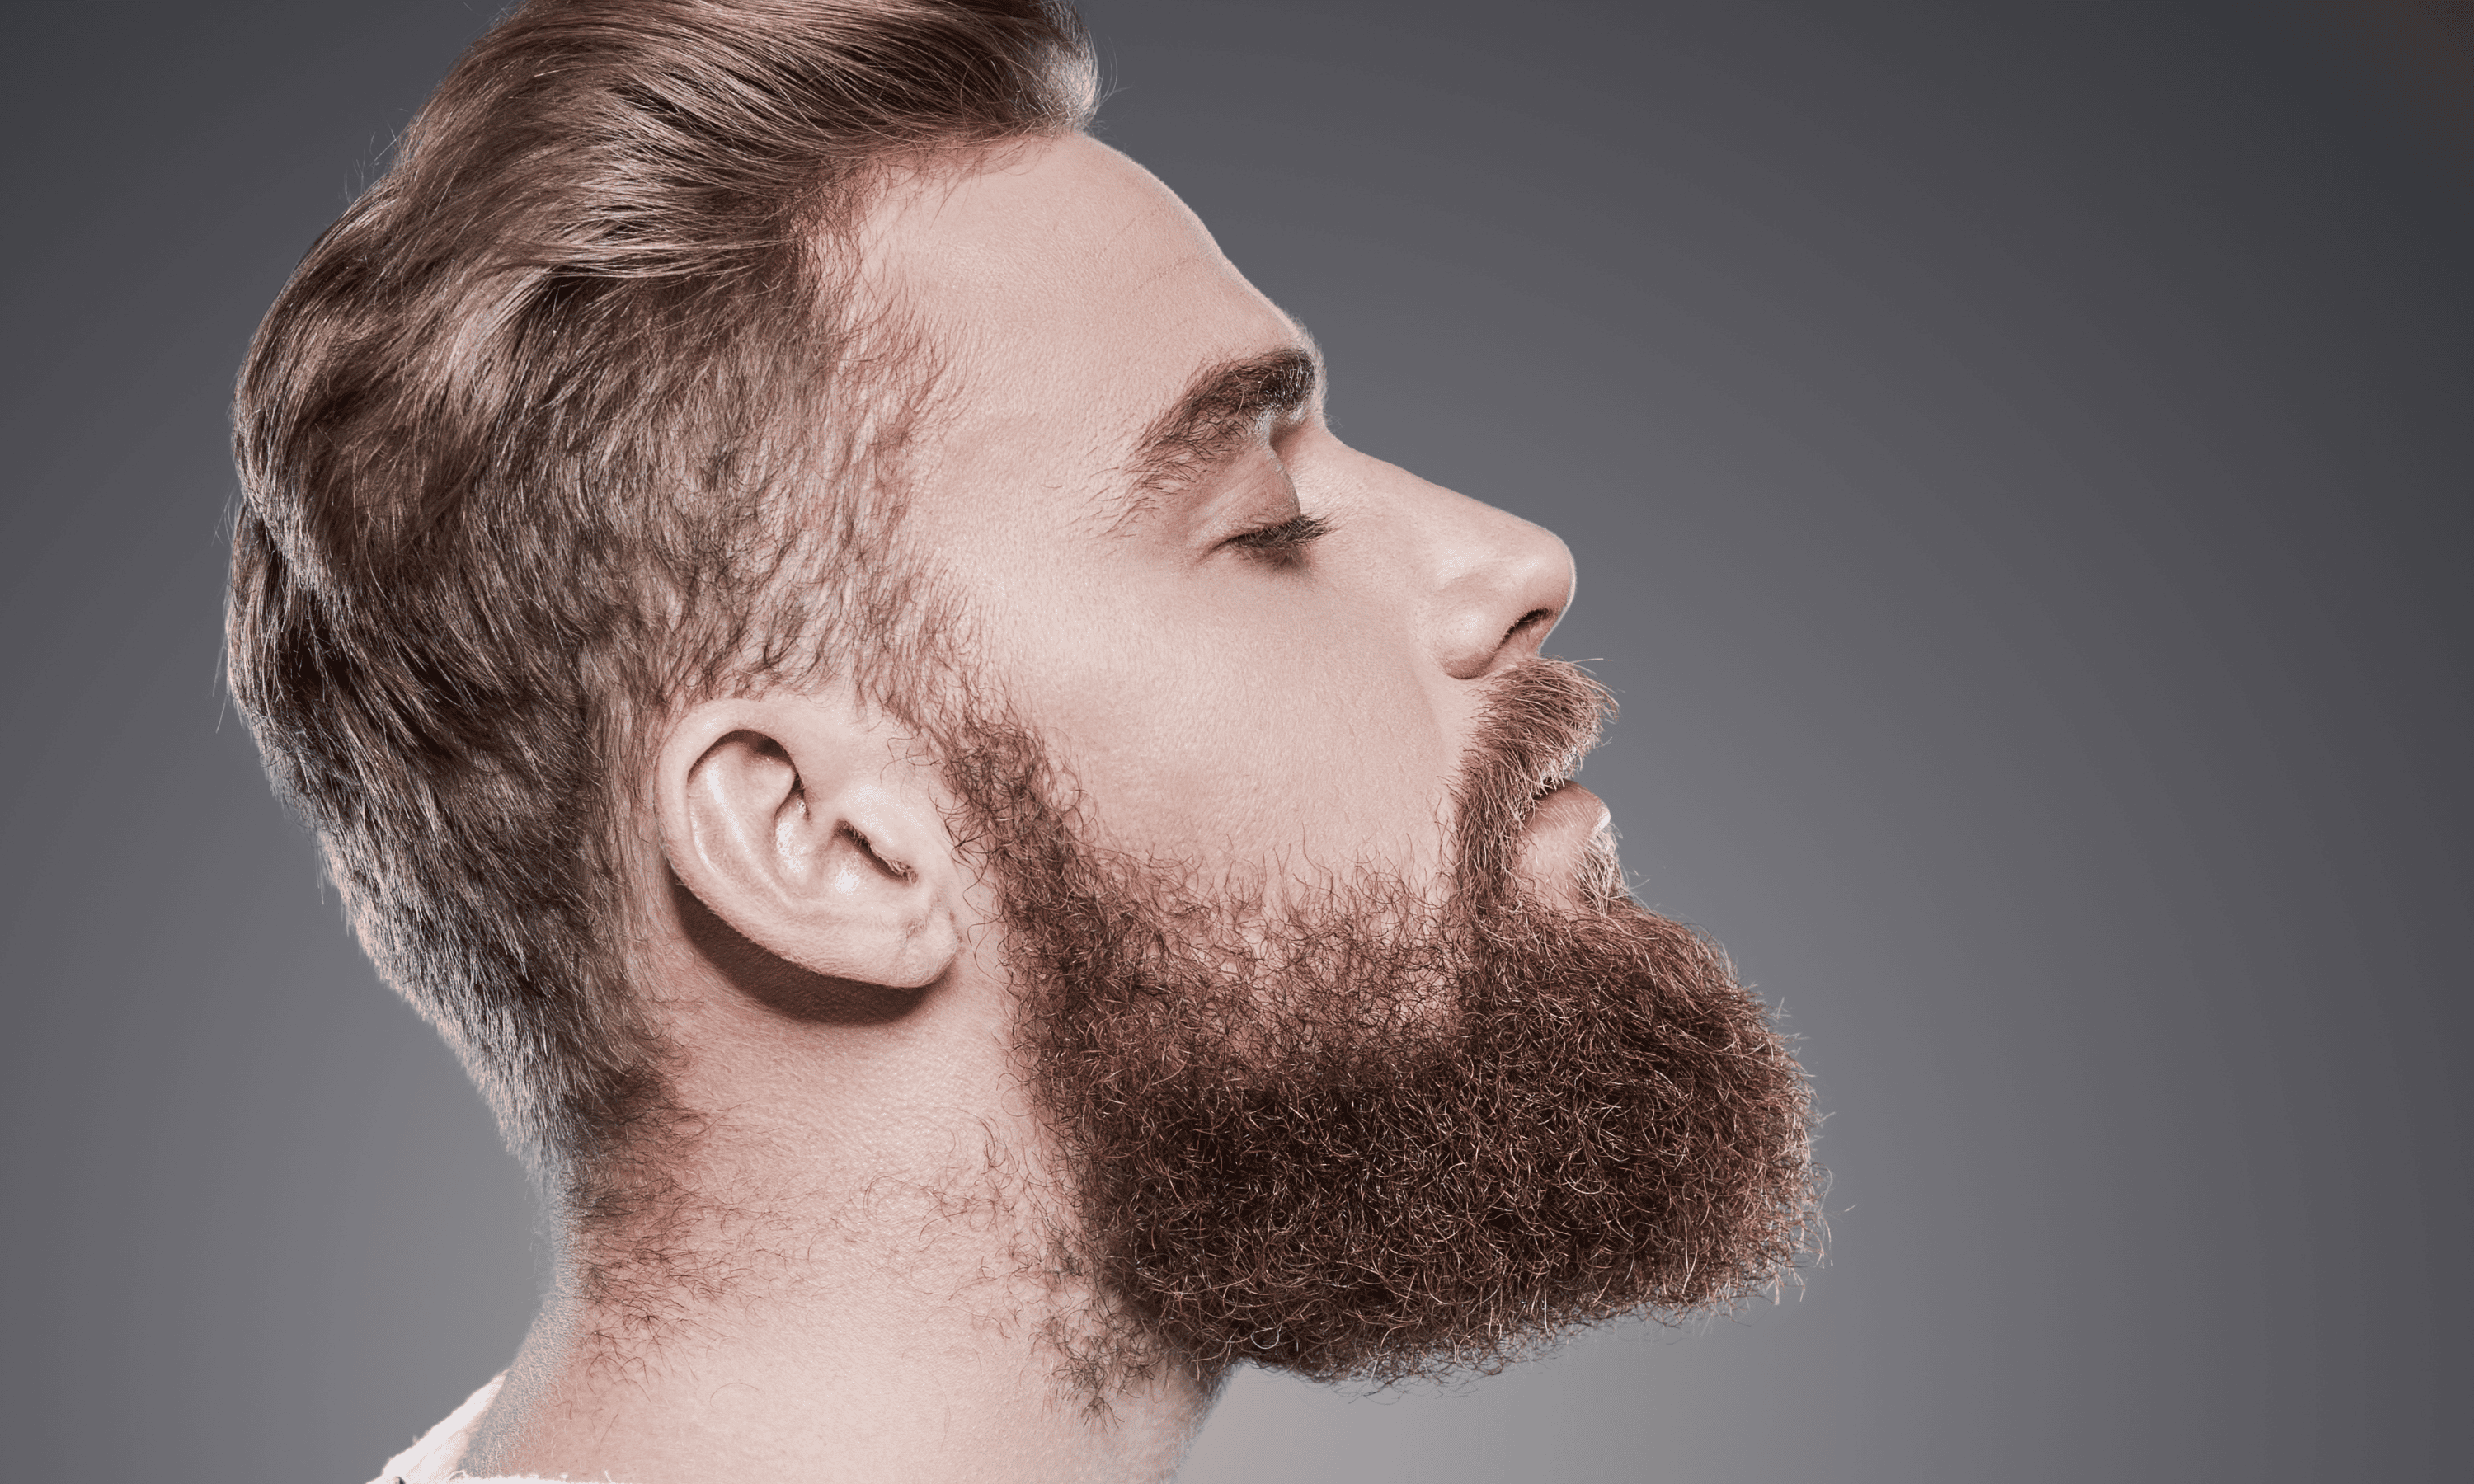 La greffe de barbe - Redéfinir le style masculin avec confiance